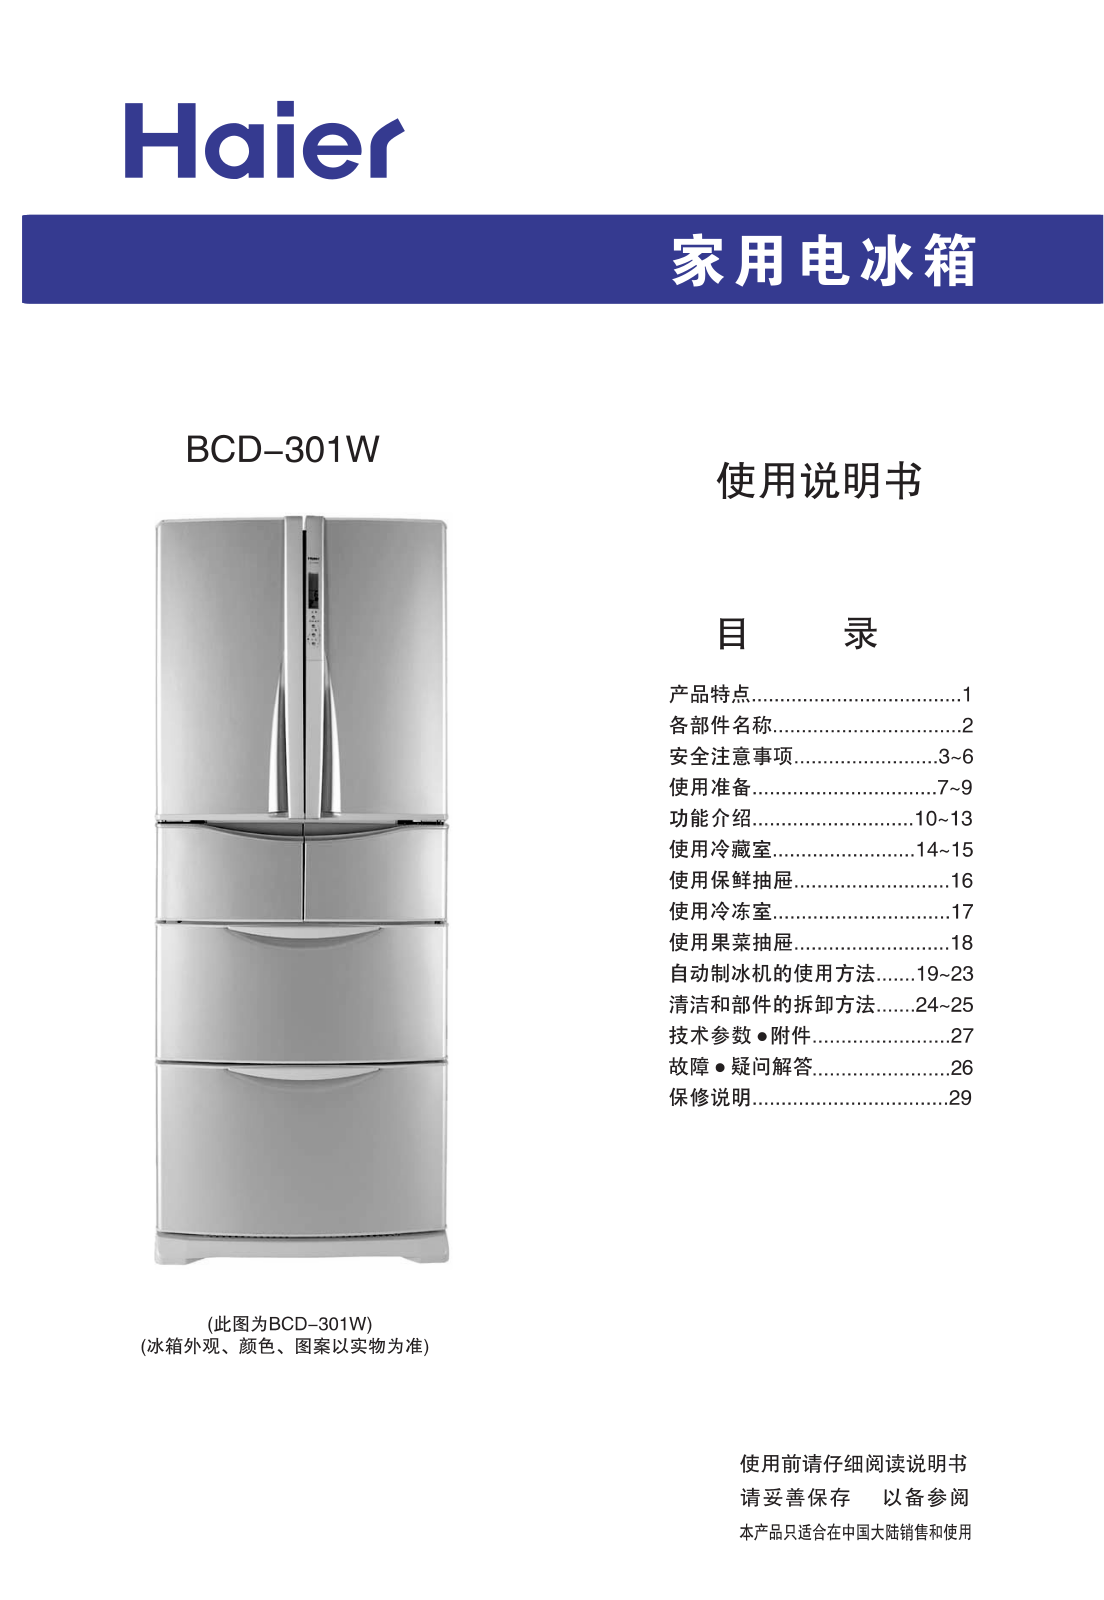 Haier BCD-301W User Manual